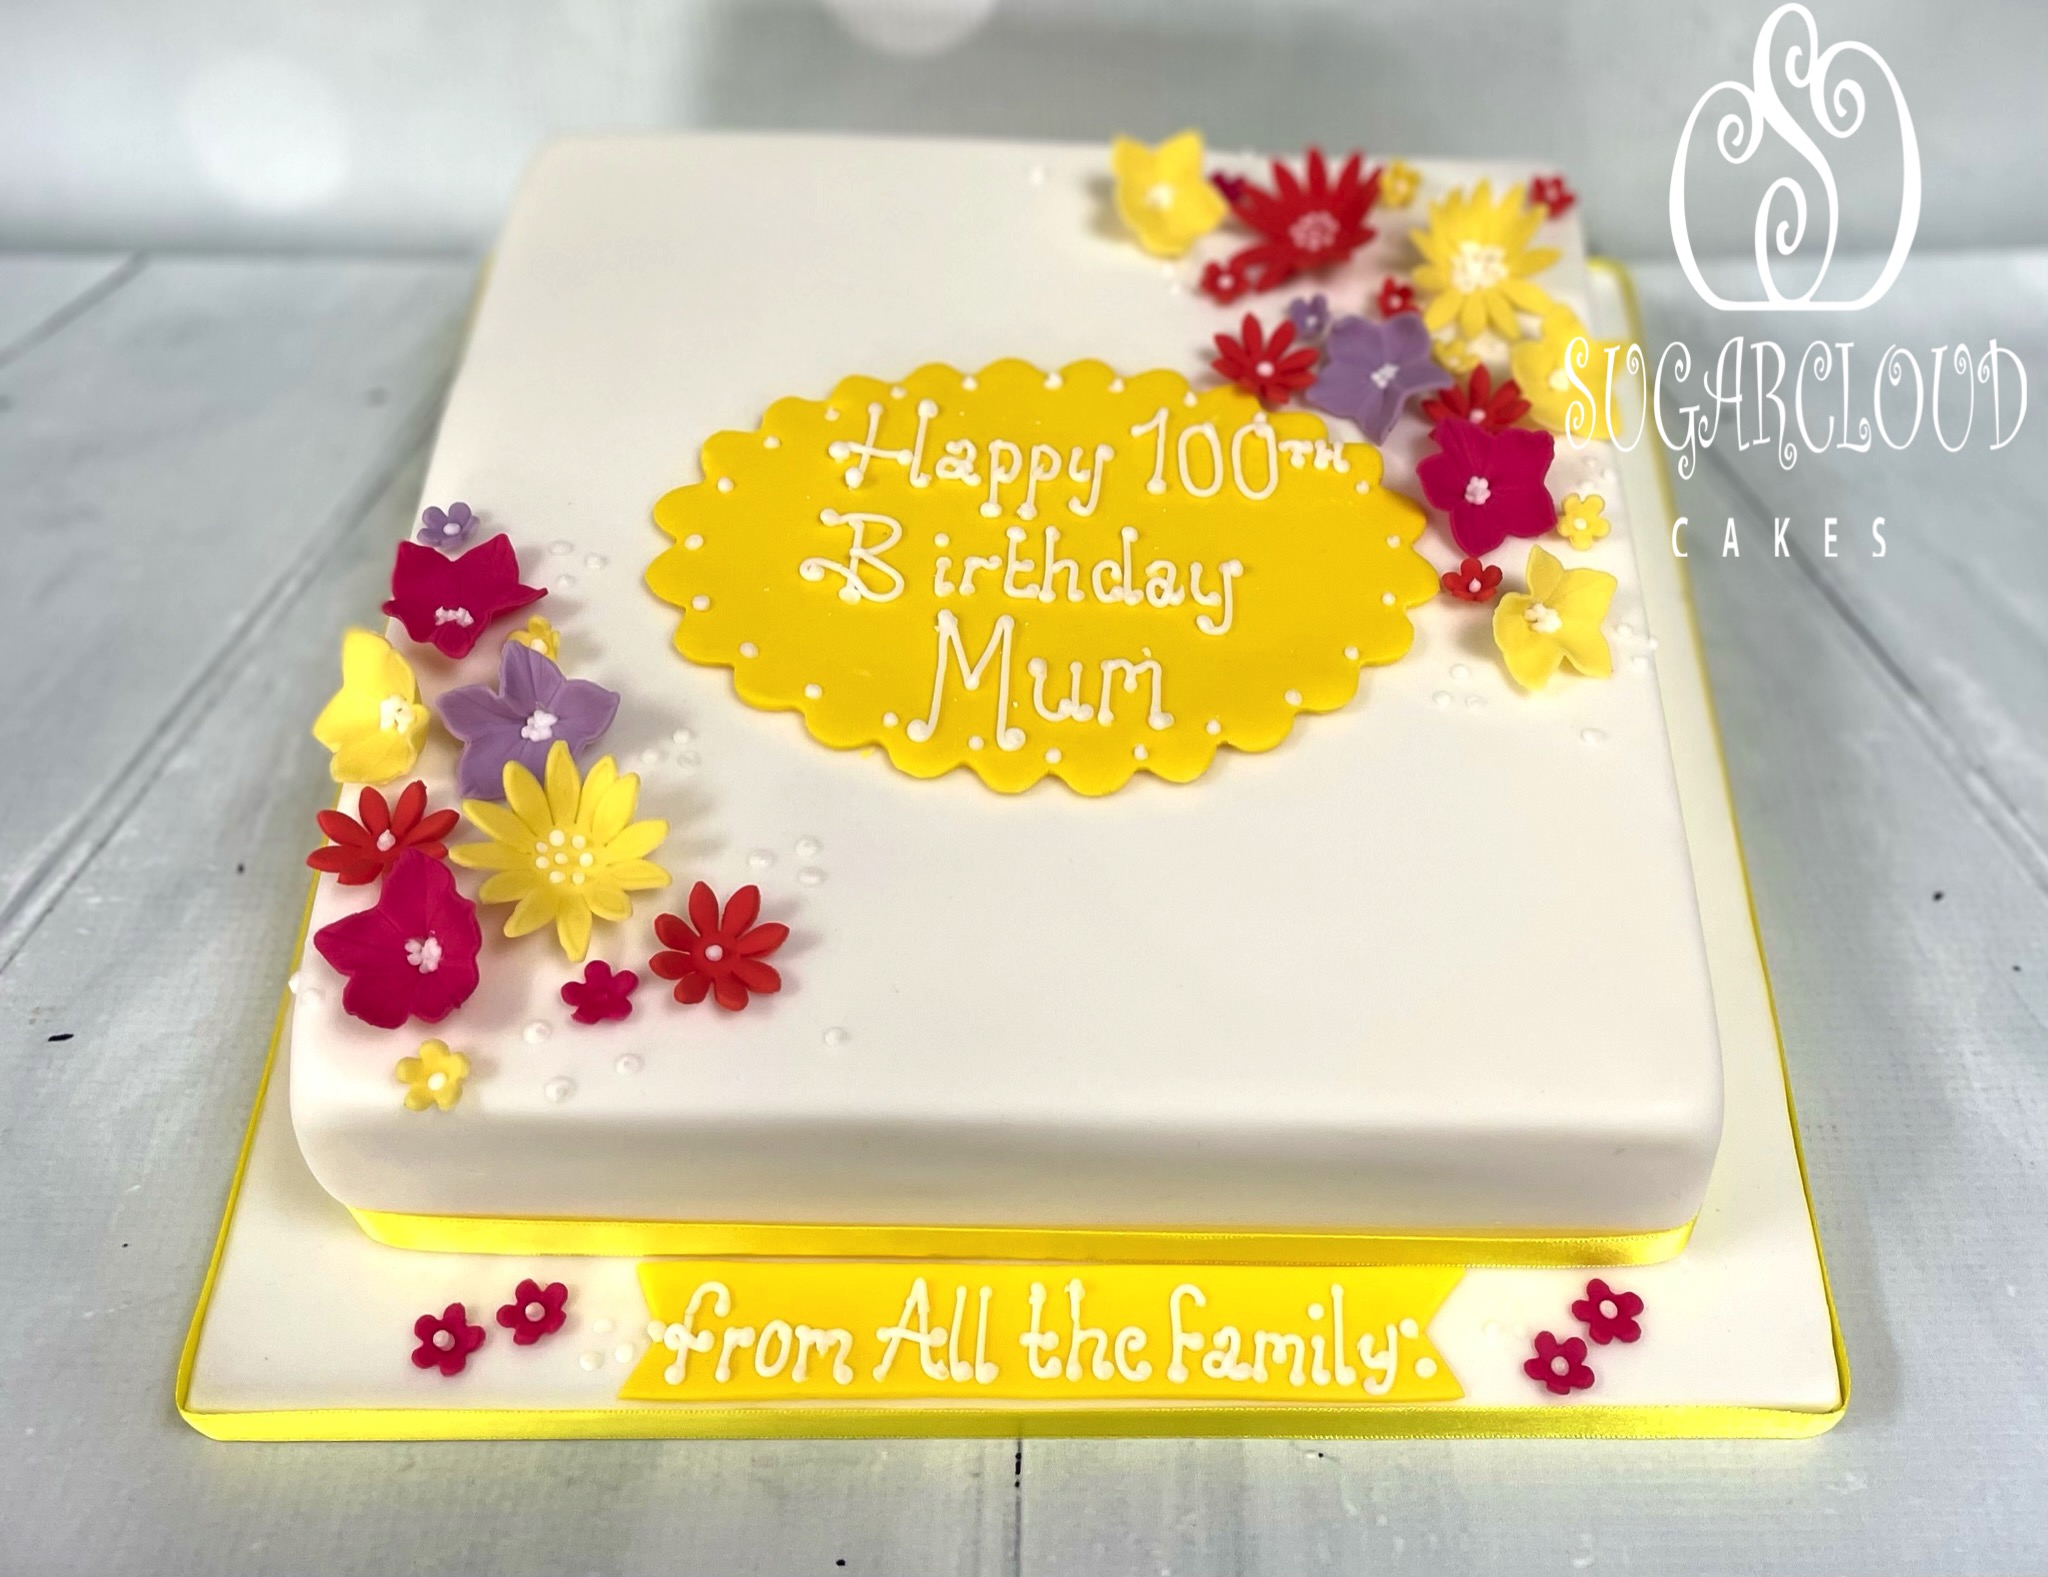 A Special 100th Birthday Cake, Nantwich